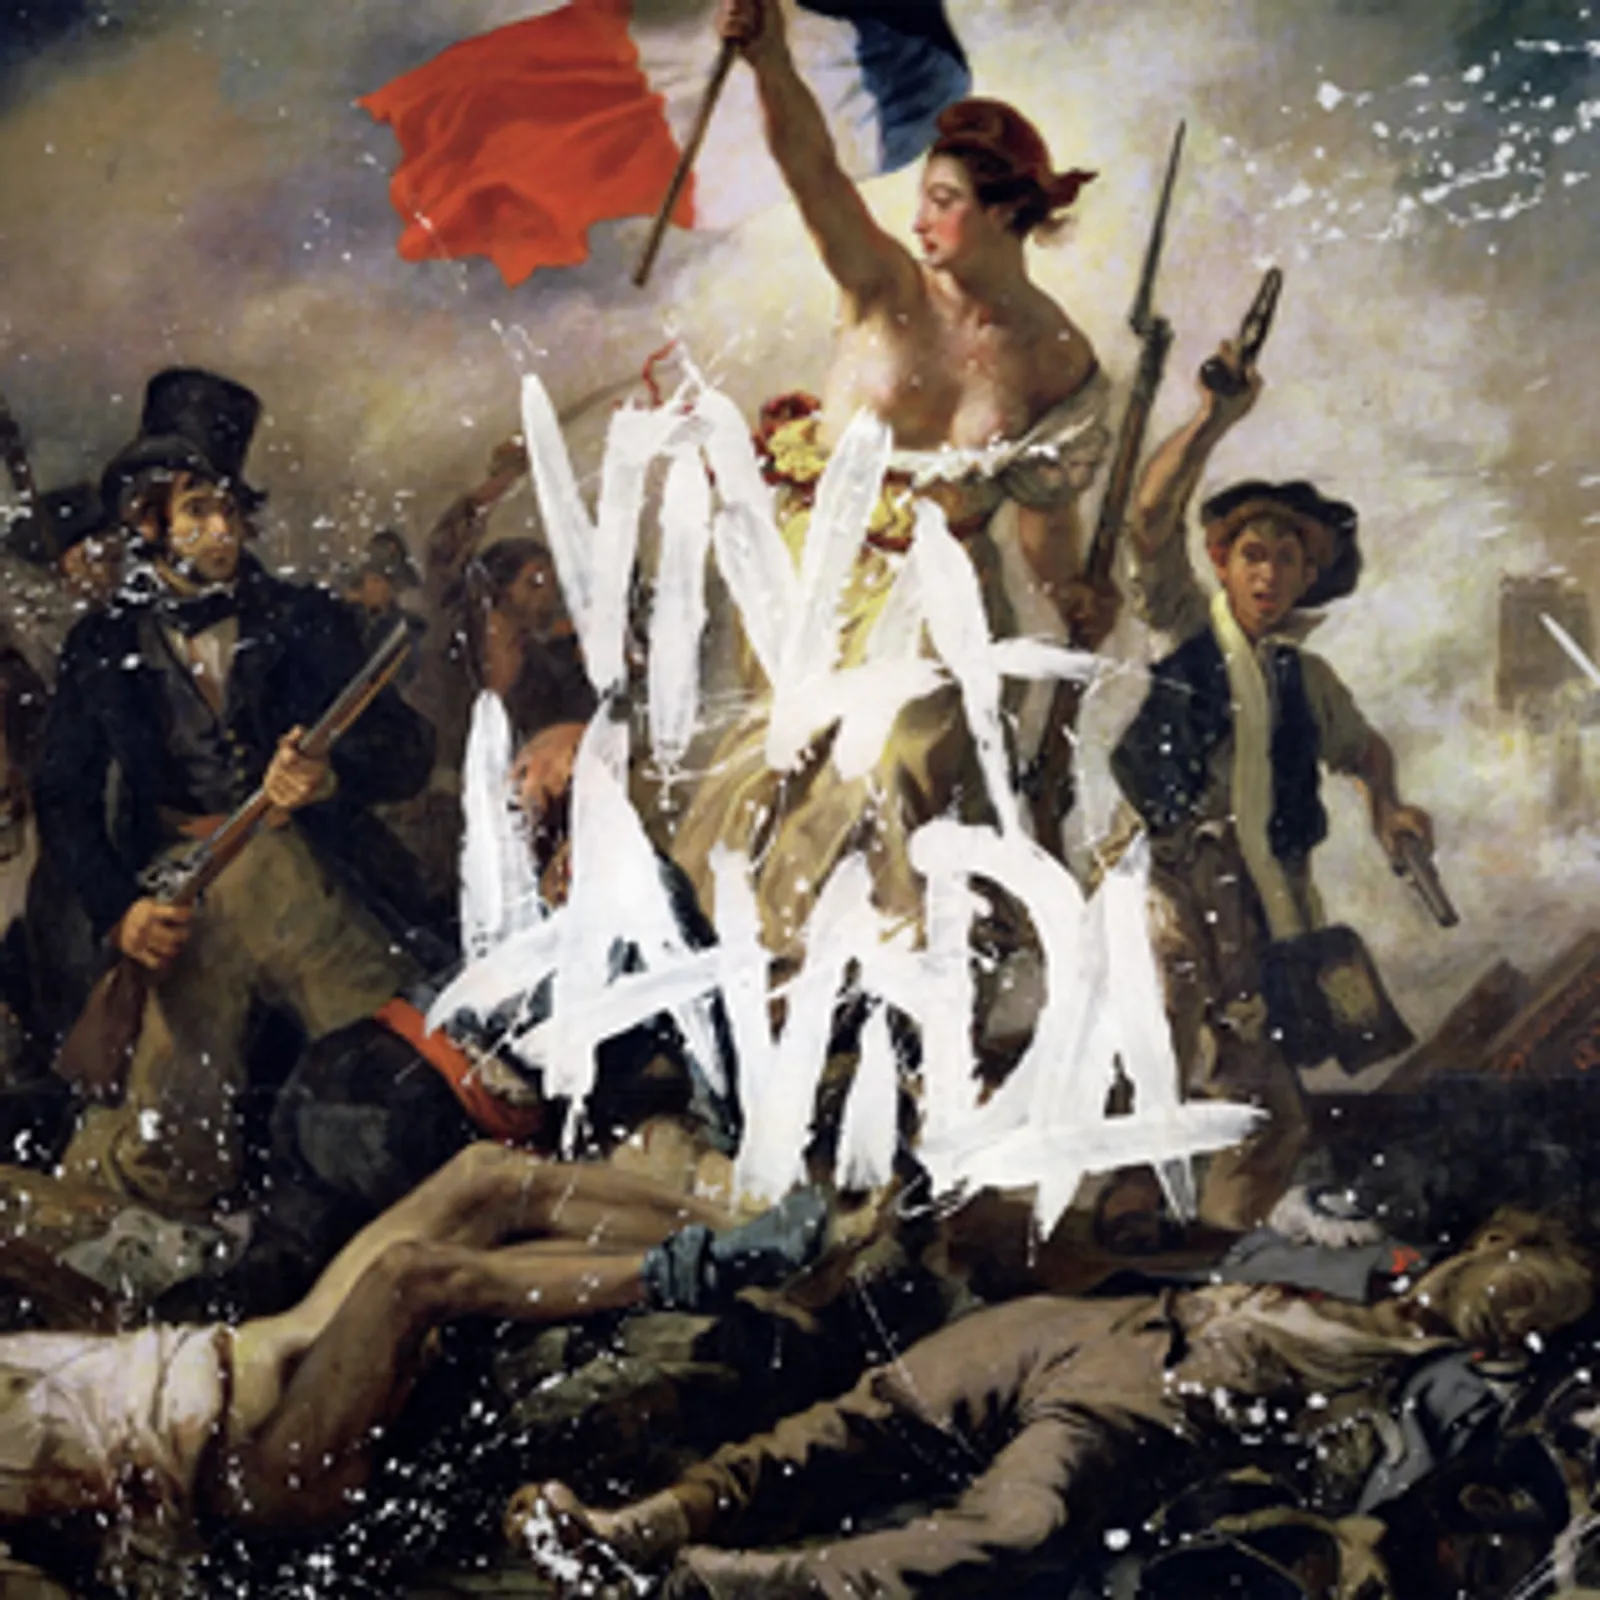 Lirik "Viva La Vida" - Coldplay, Lagu Penuh Makna untuk Renungan Diri